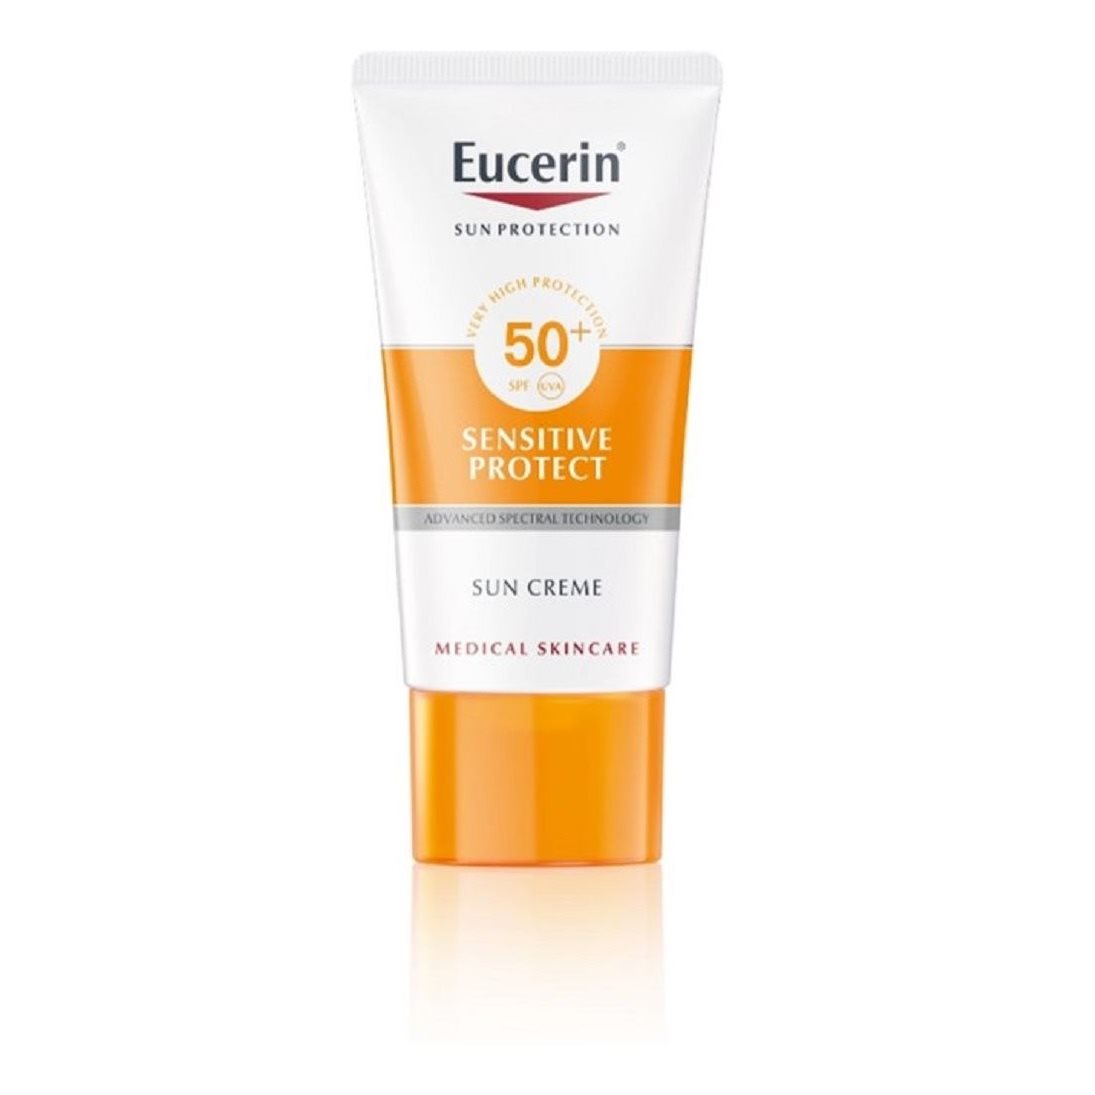 Eucerin Sun Creme SPF 50+